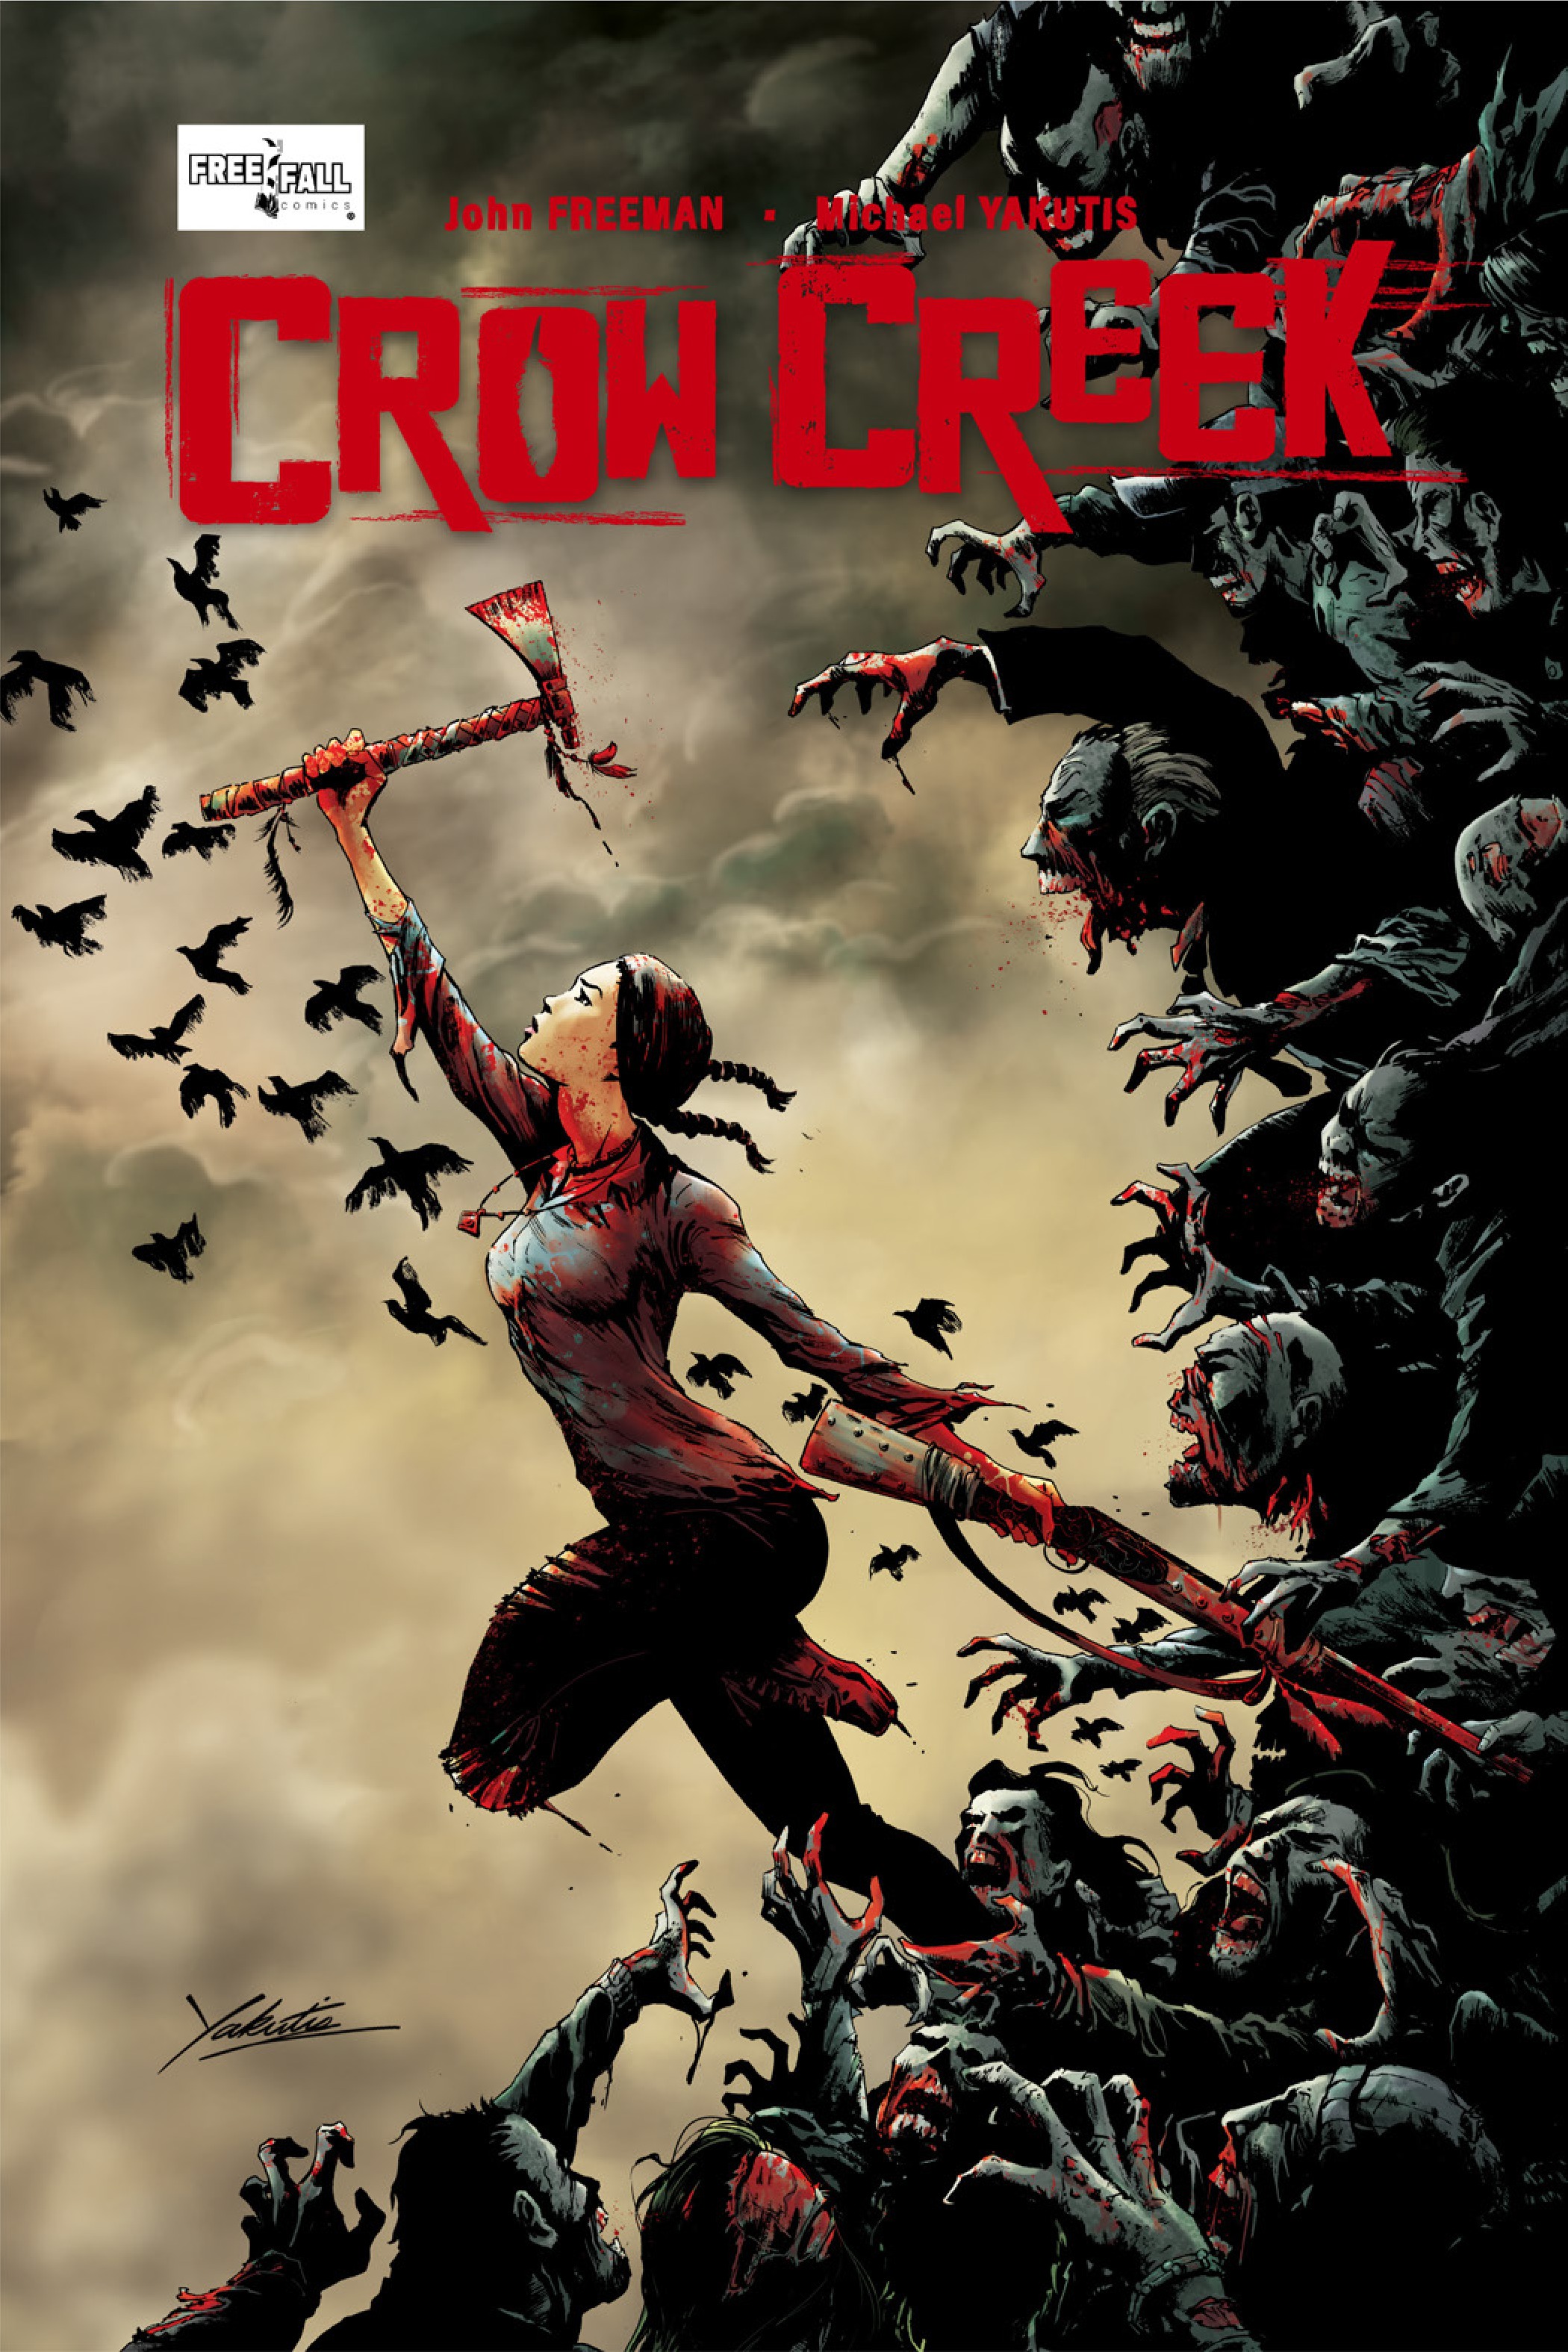 Read online Crow Creek comic -  Issue # Full - 1